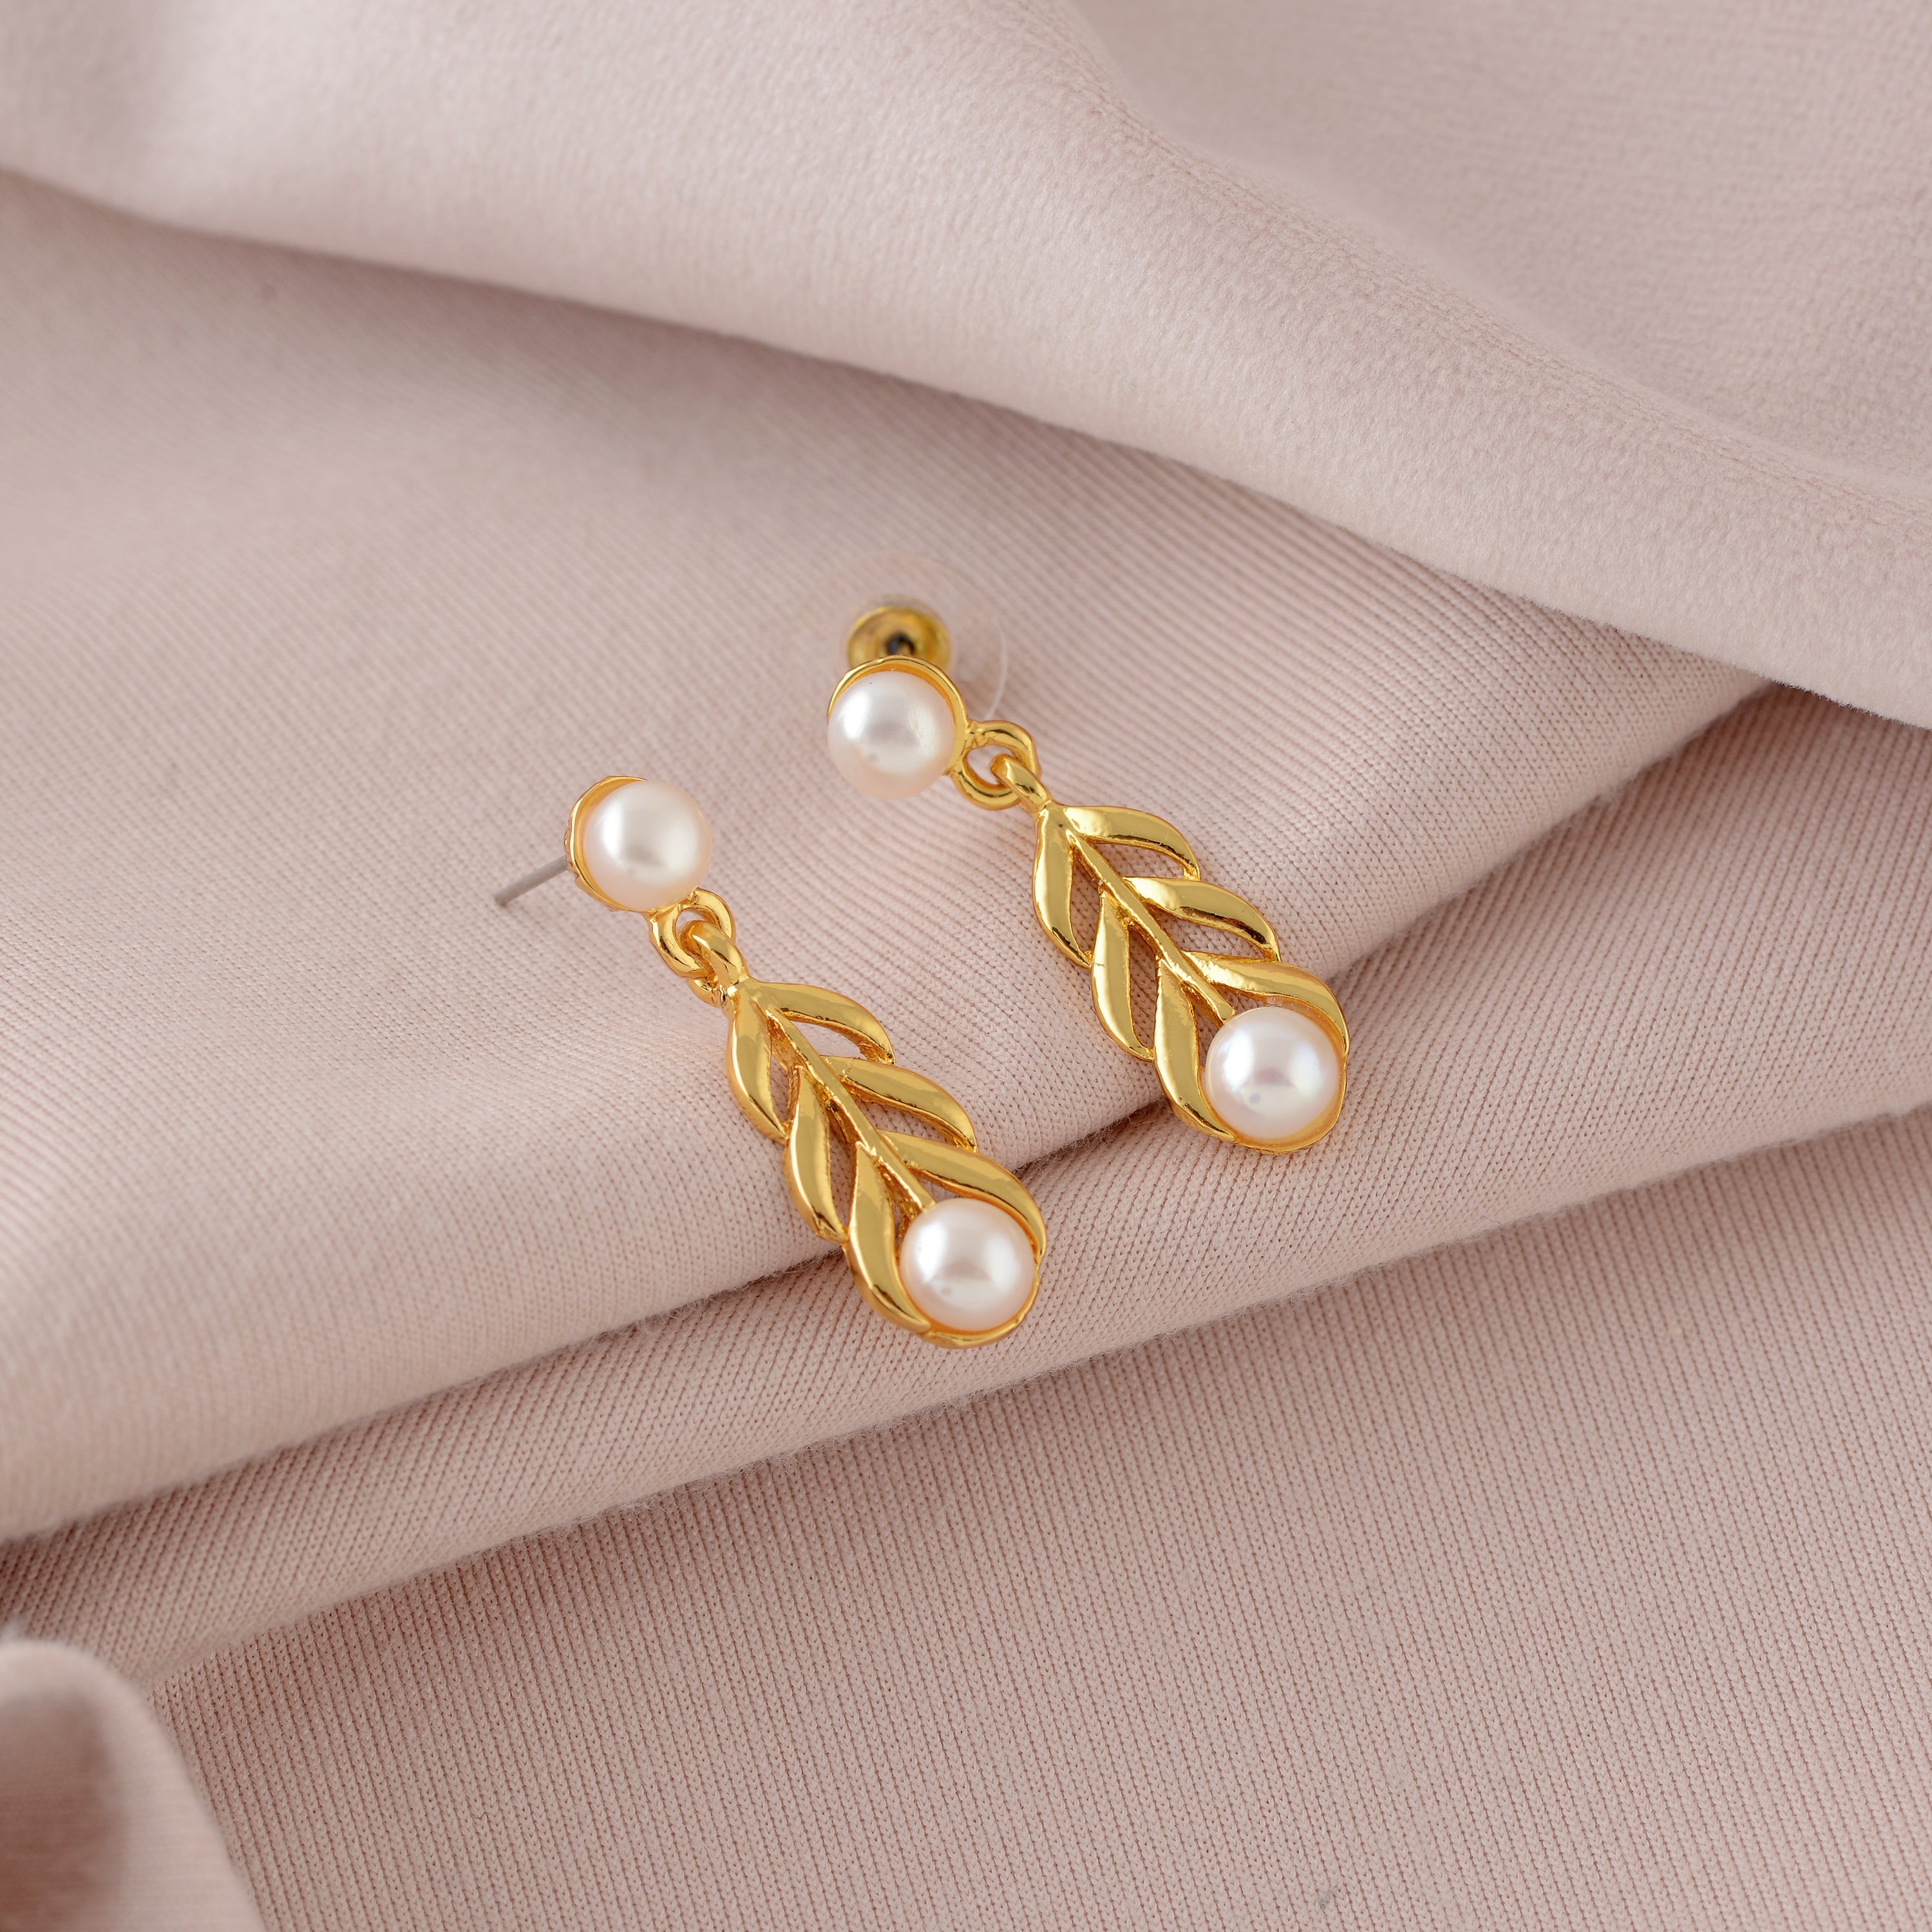 Stylish Gold Coated Pearl Dangler Earrings